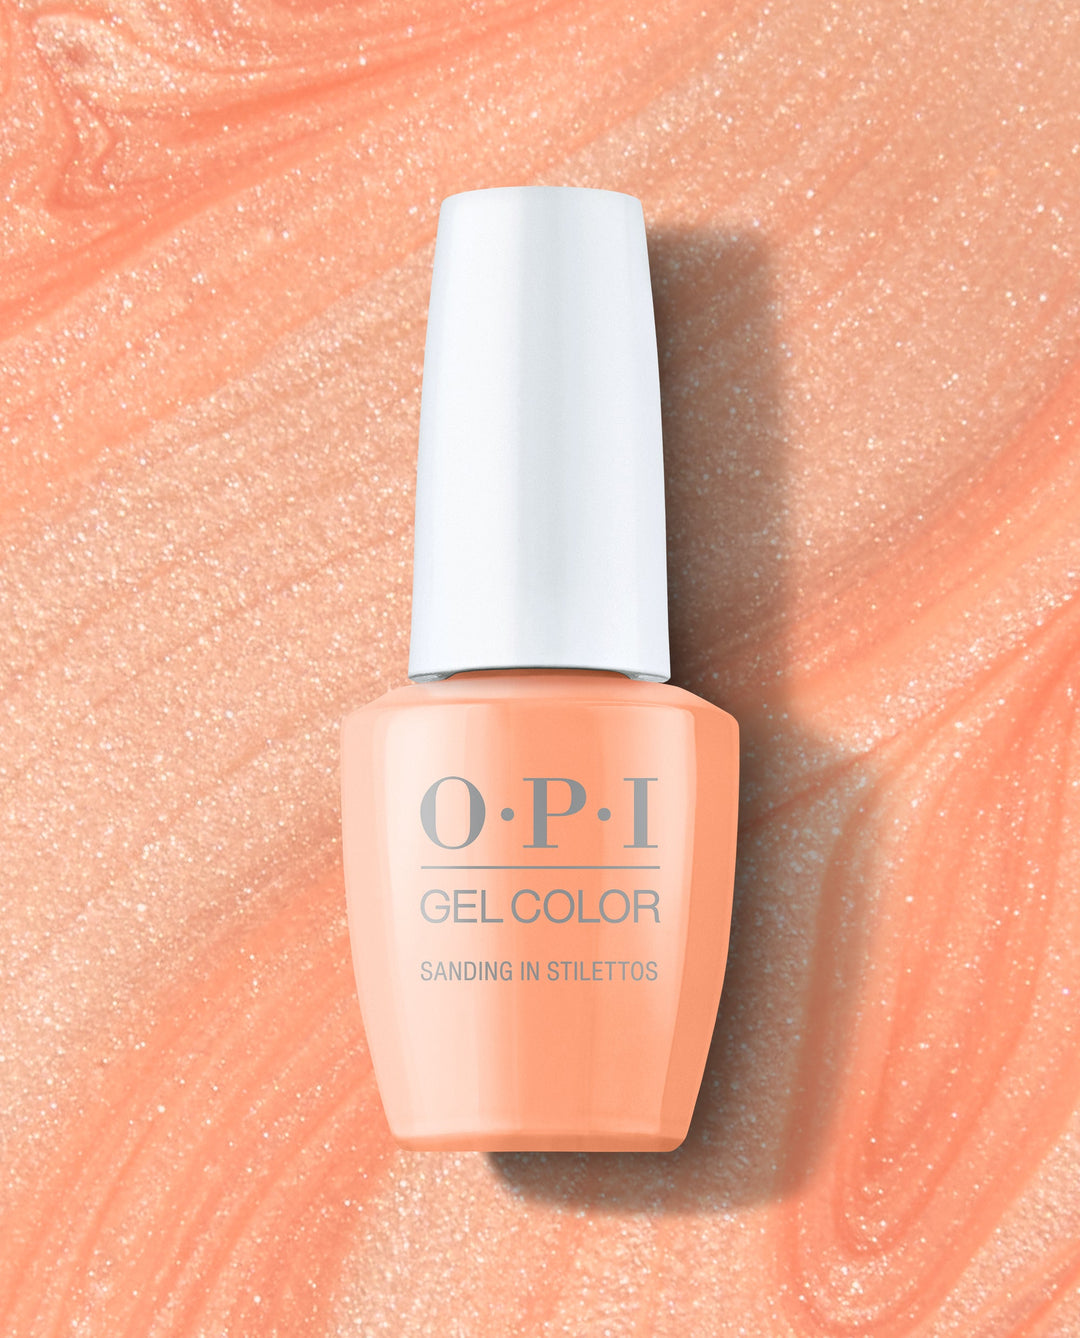 OPI Sanding in Stilettos Orange Gel Nail Polish